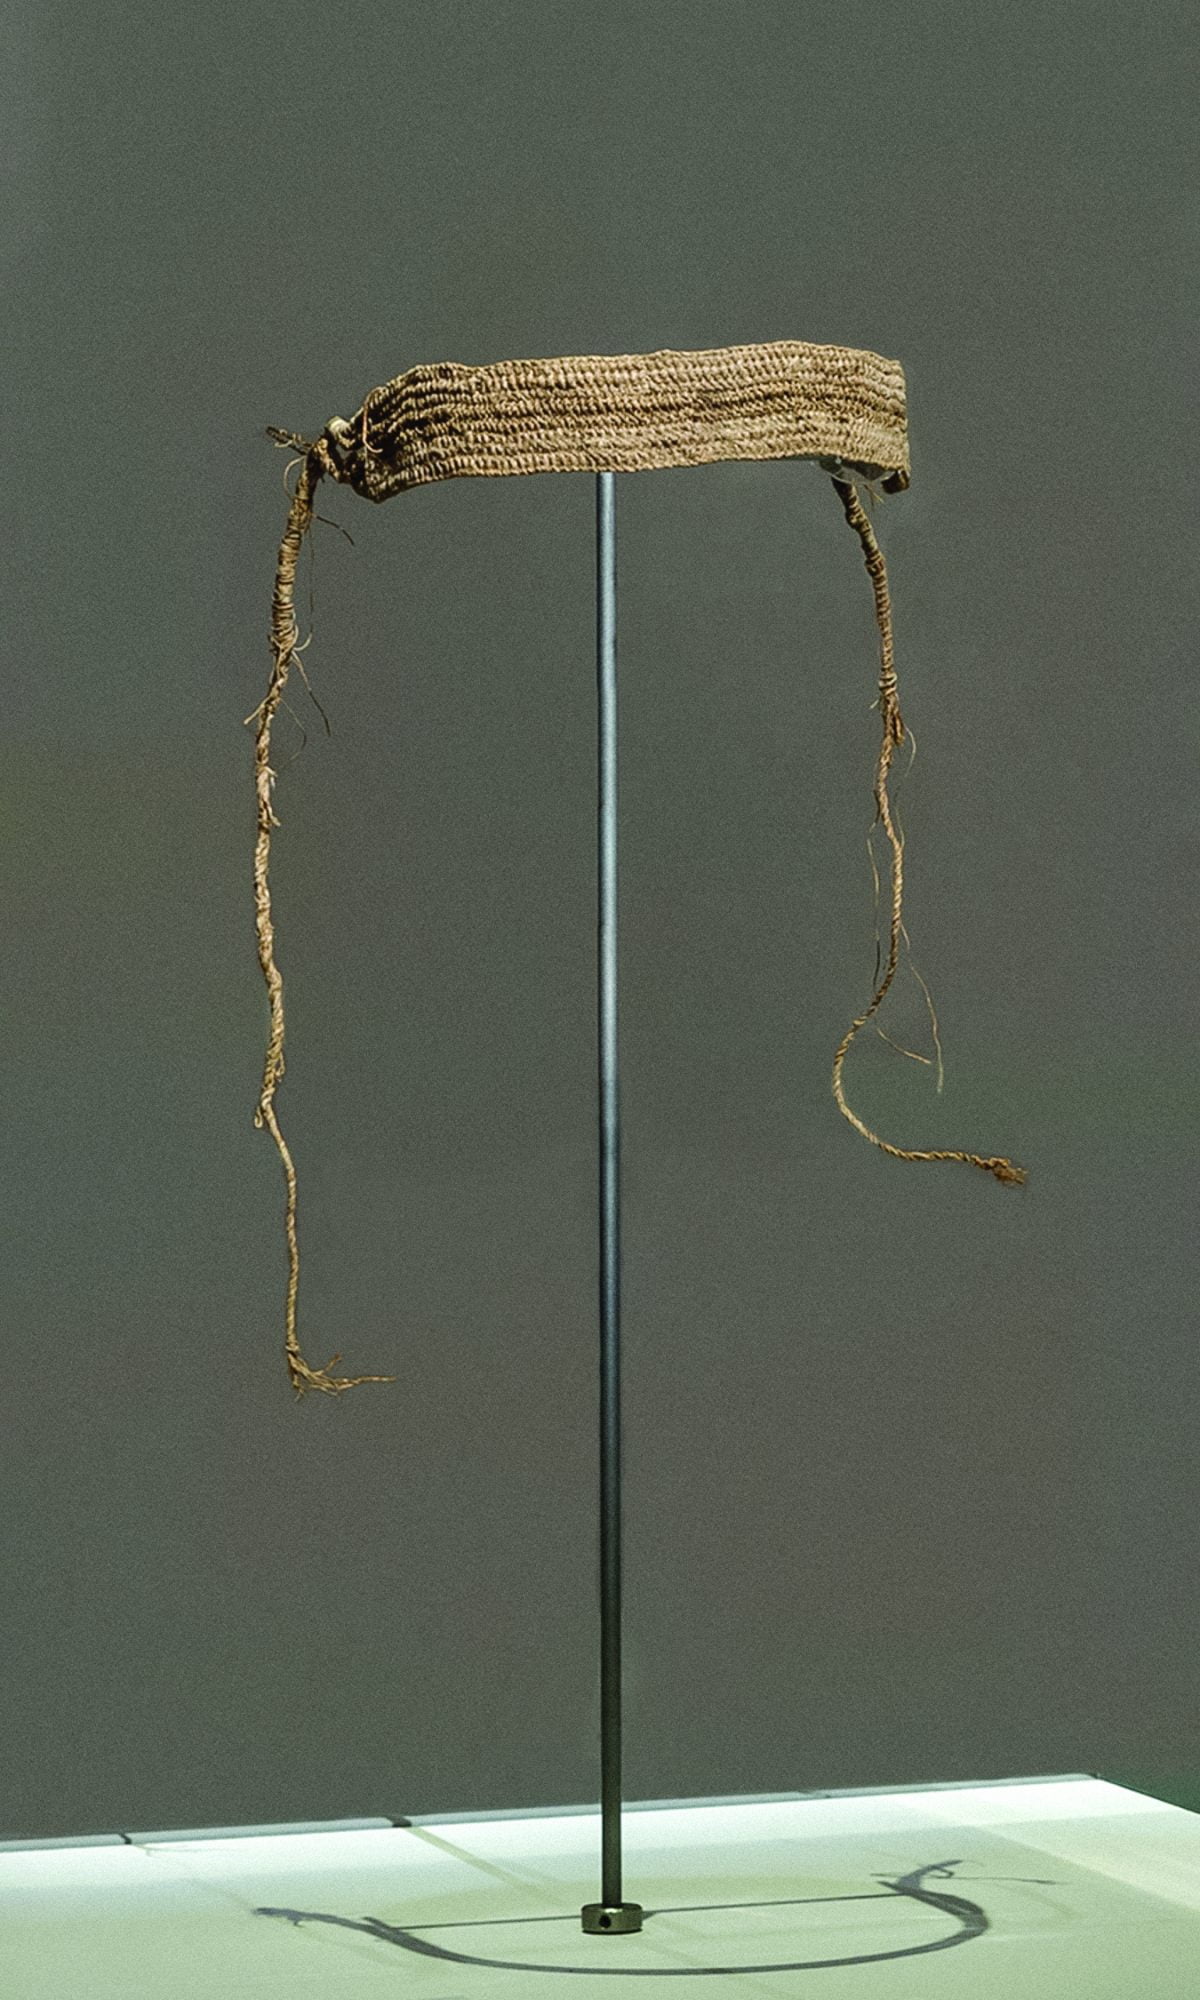 Liwik (Ancestor), Headband c. 1878
Museums Victoria Collection